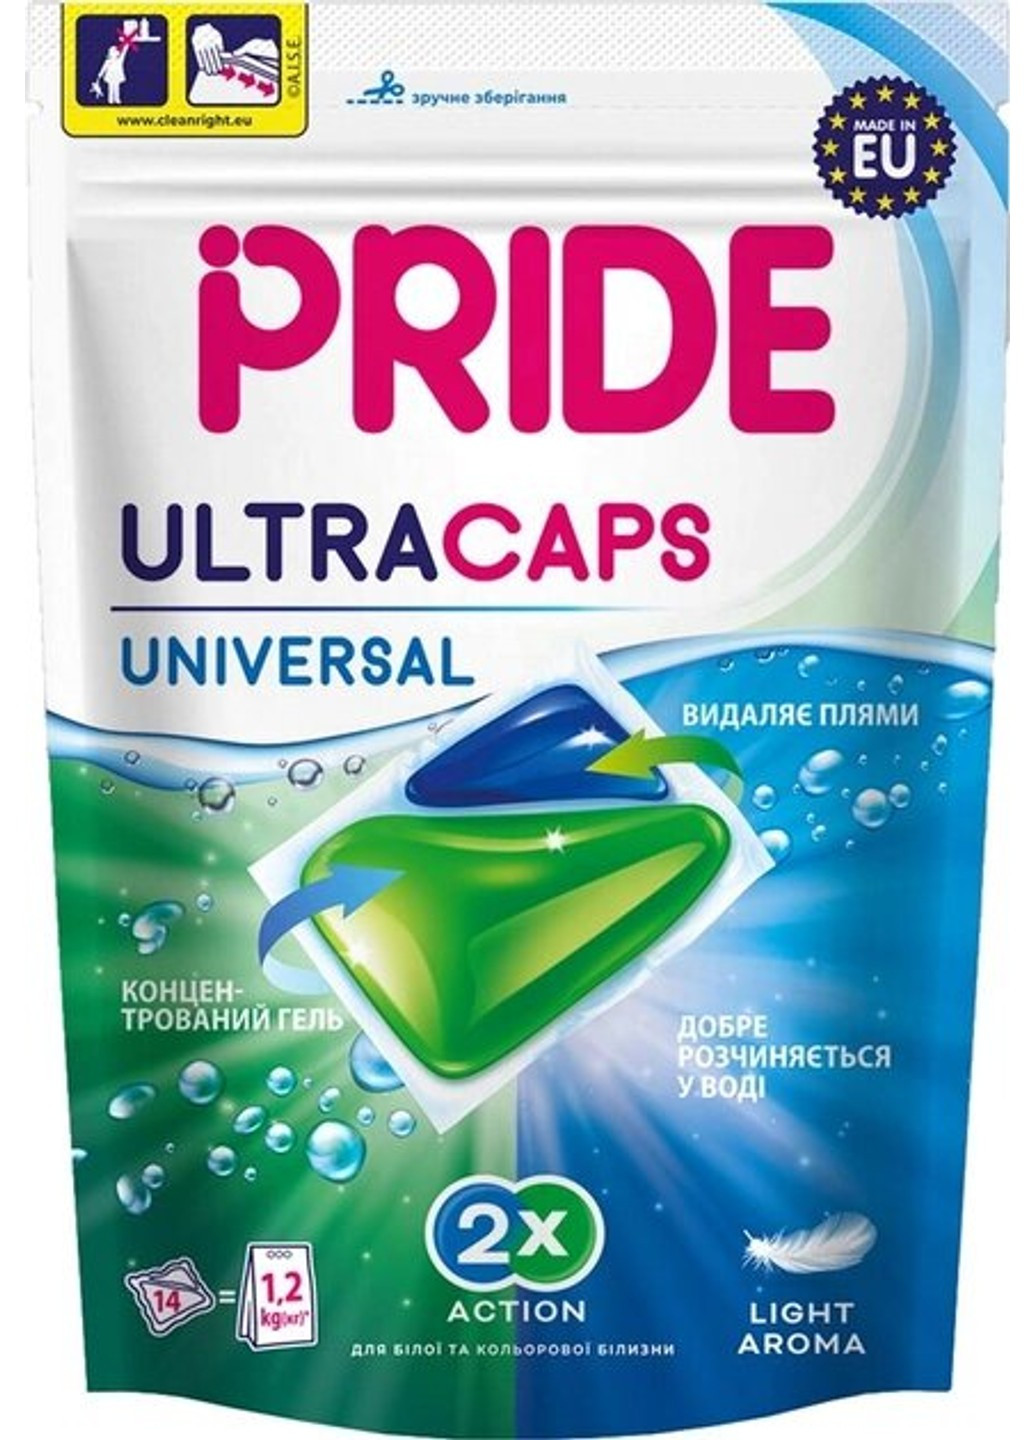 Капсулы для стирки Ultra Caps Universal 14 шт Pride (261555717)